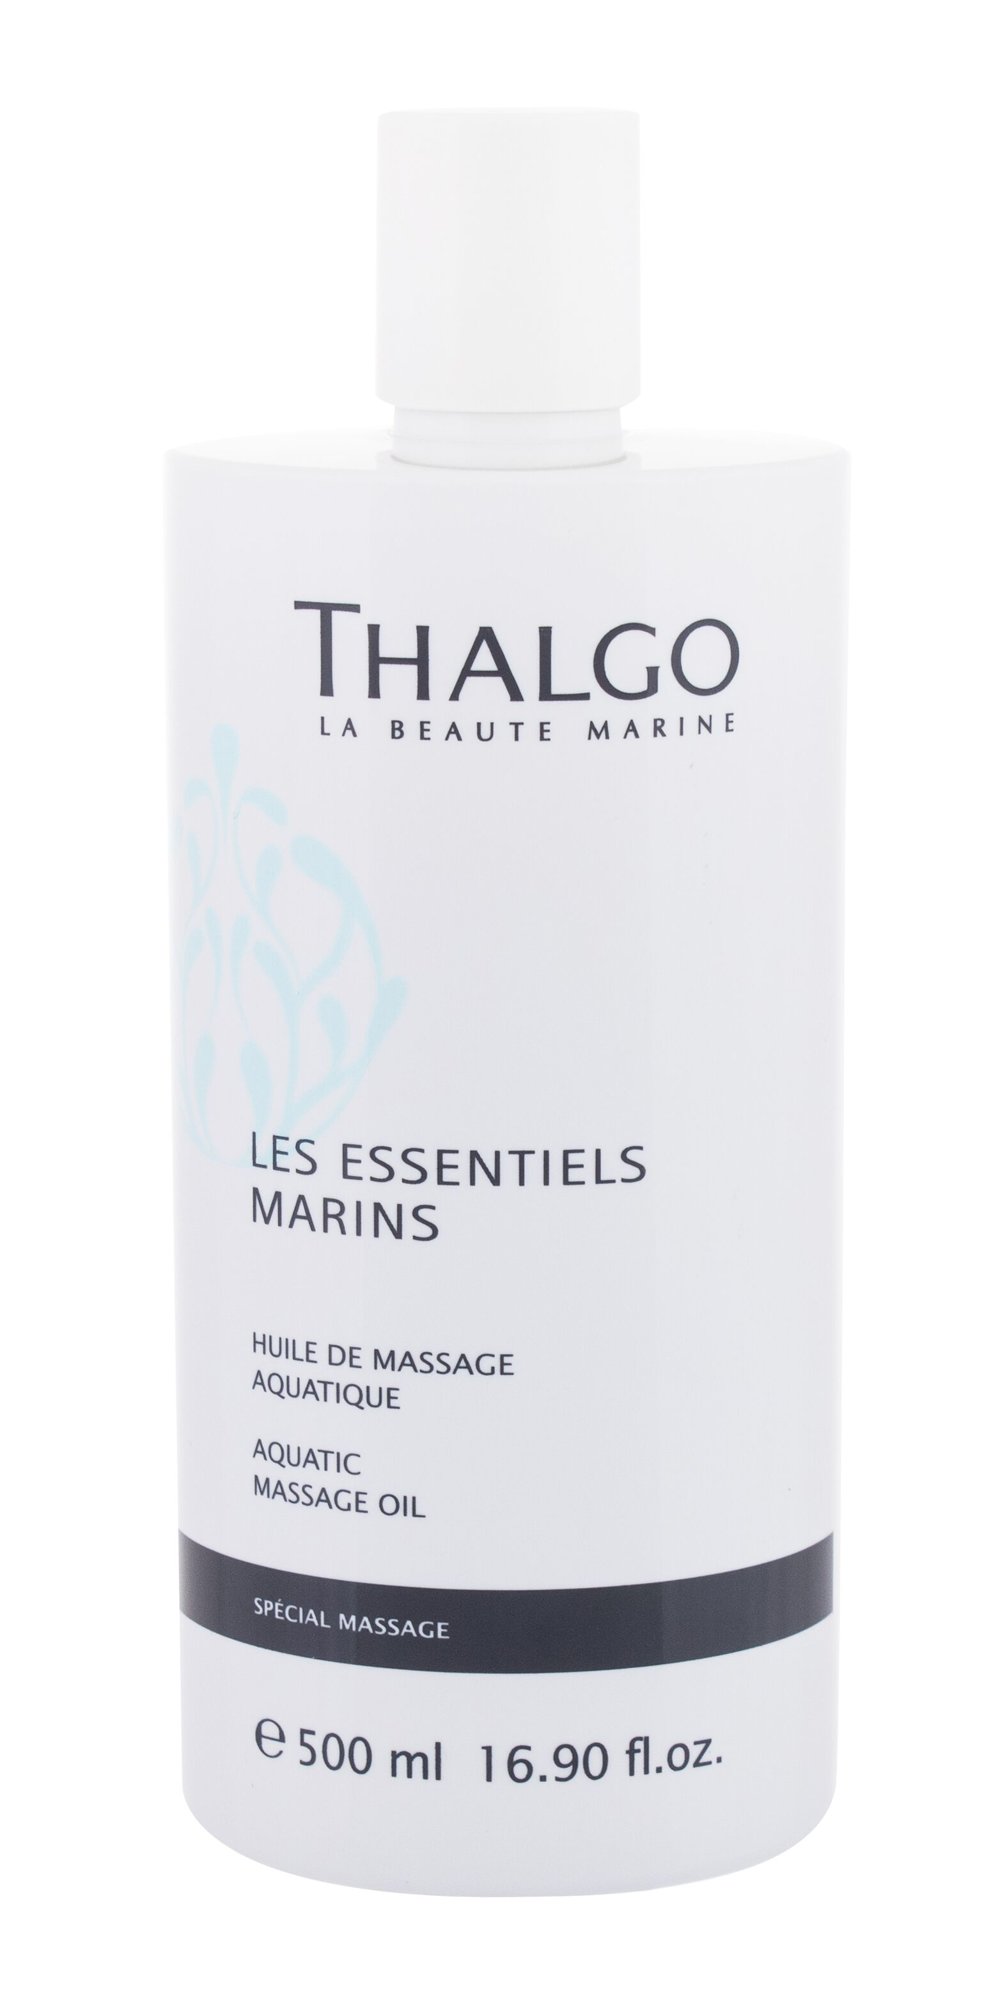 Thalgo Les Essentiels Marins Aquatic Massage Oil priemonė masažui